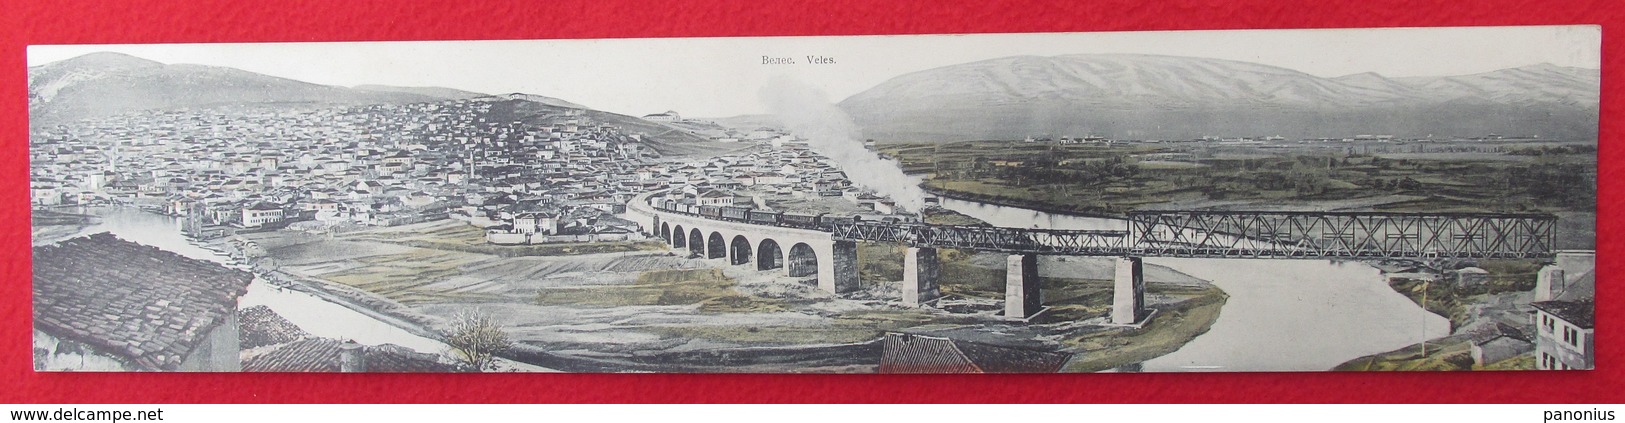 328_001_veles-macedonia-railway-train-long-postcard-42x9cm-1930s.jpg